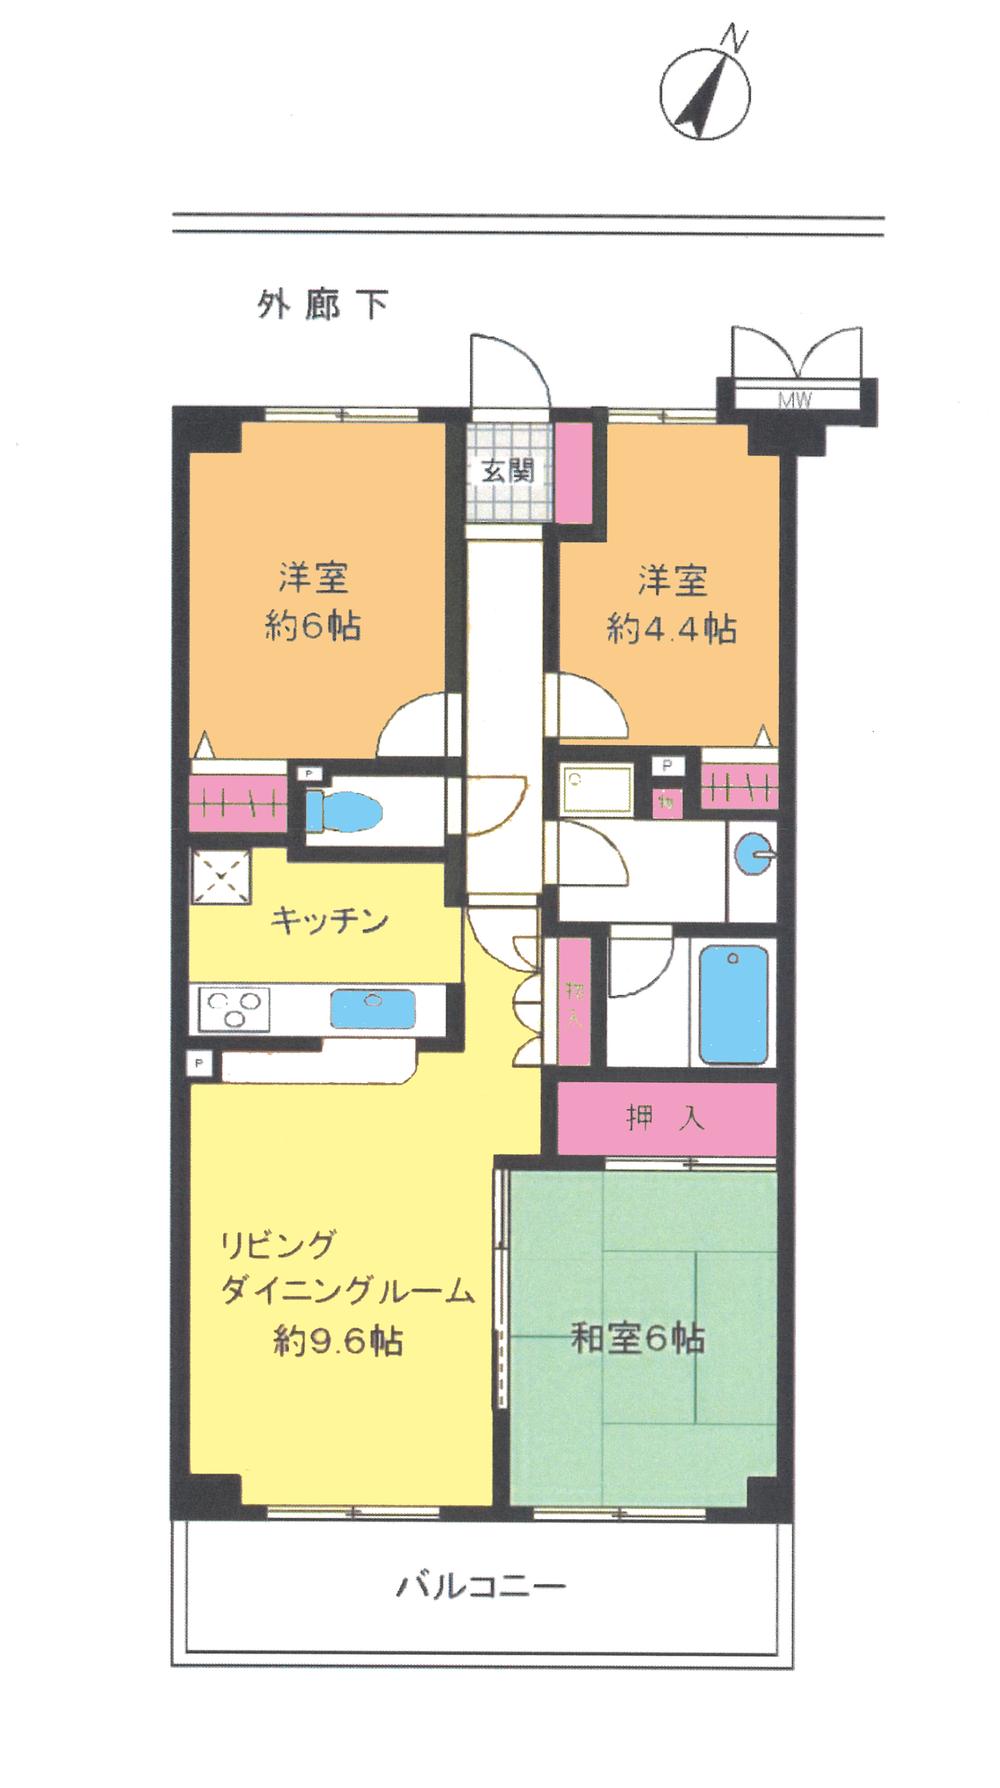 Floor plan. 3LDK, Price 11.8 million yen, Occupied area 64.96 sq m , Balcony area 8.12 sq m floor plan